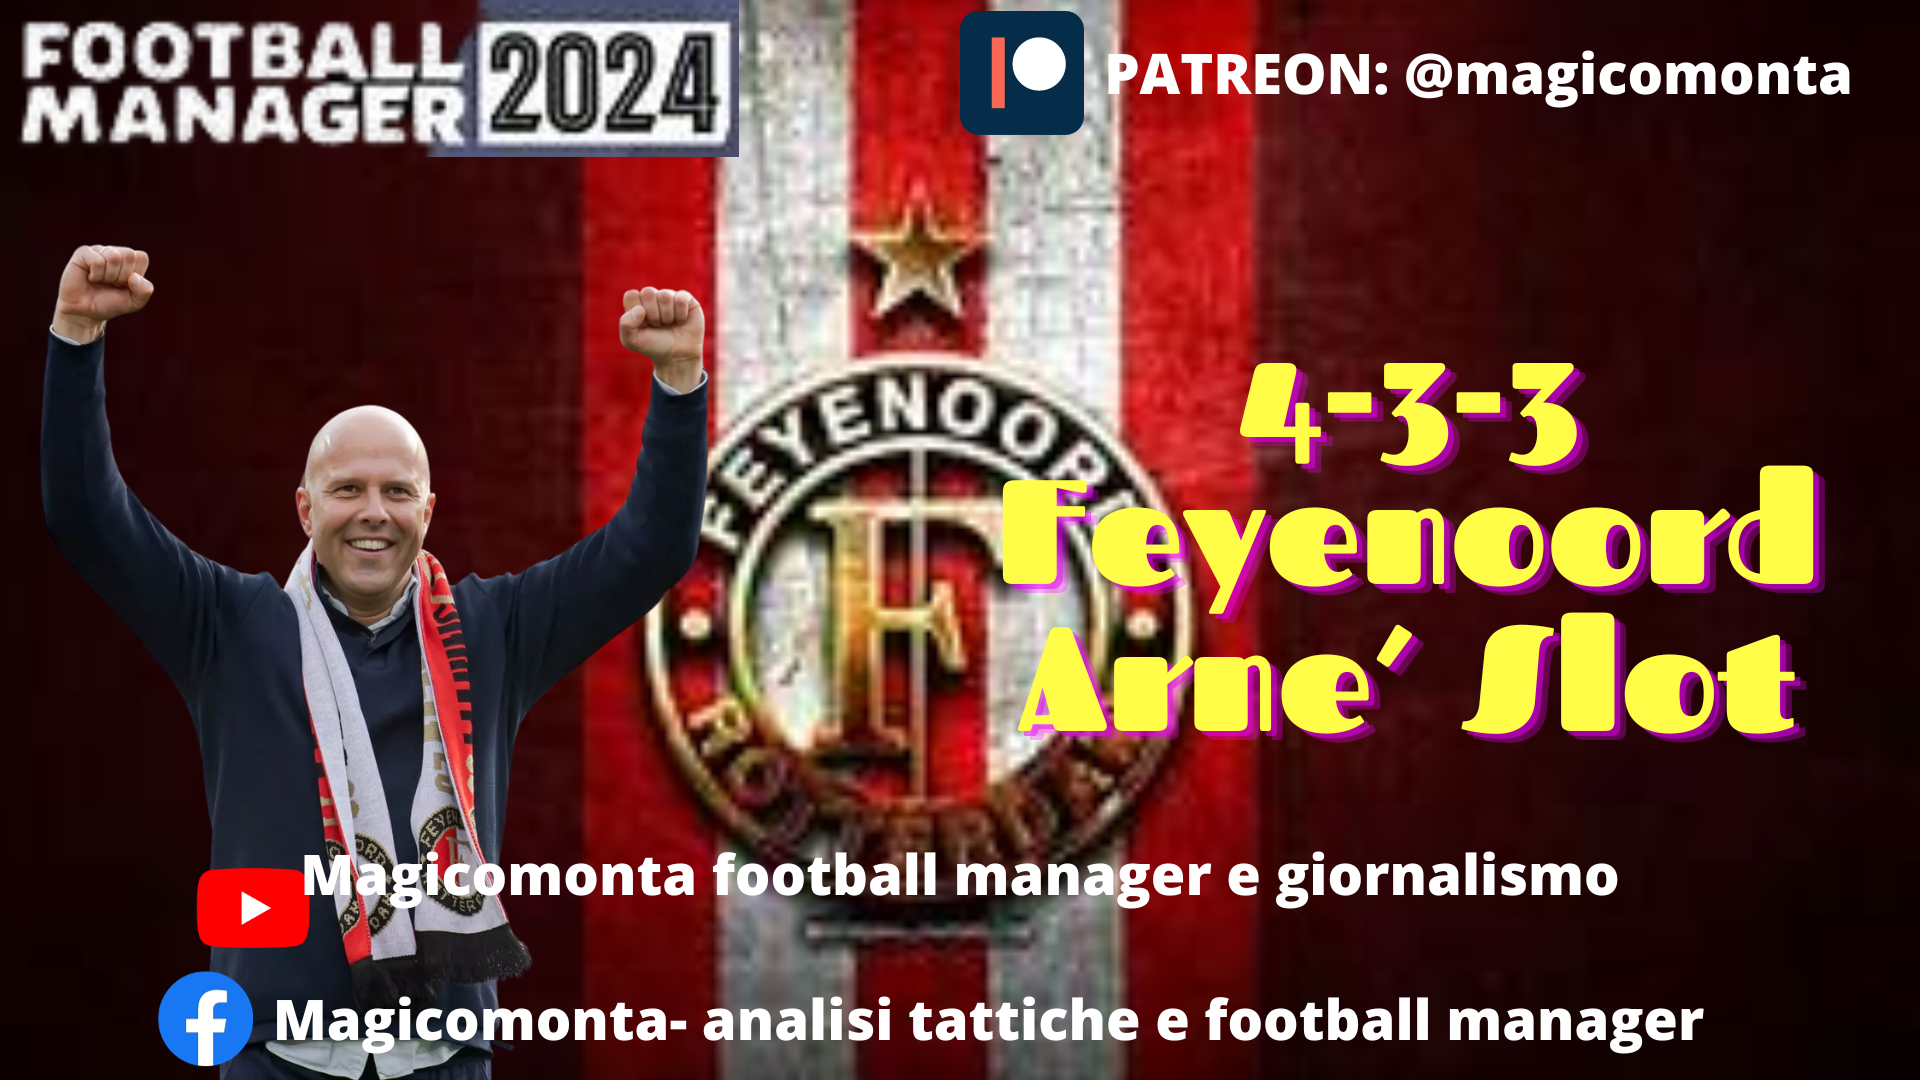 FM2024战术 Arnè Slot’s Feyenoord4-3-3